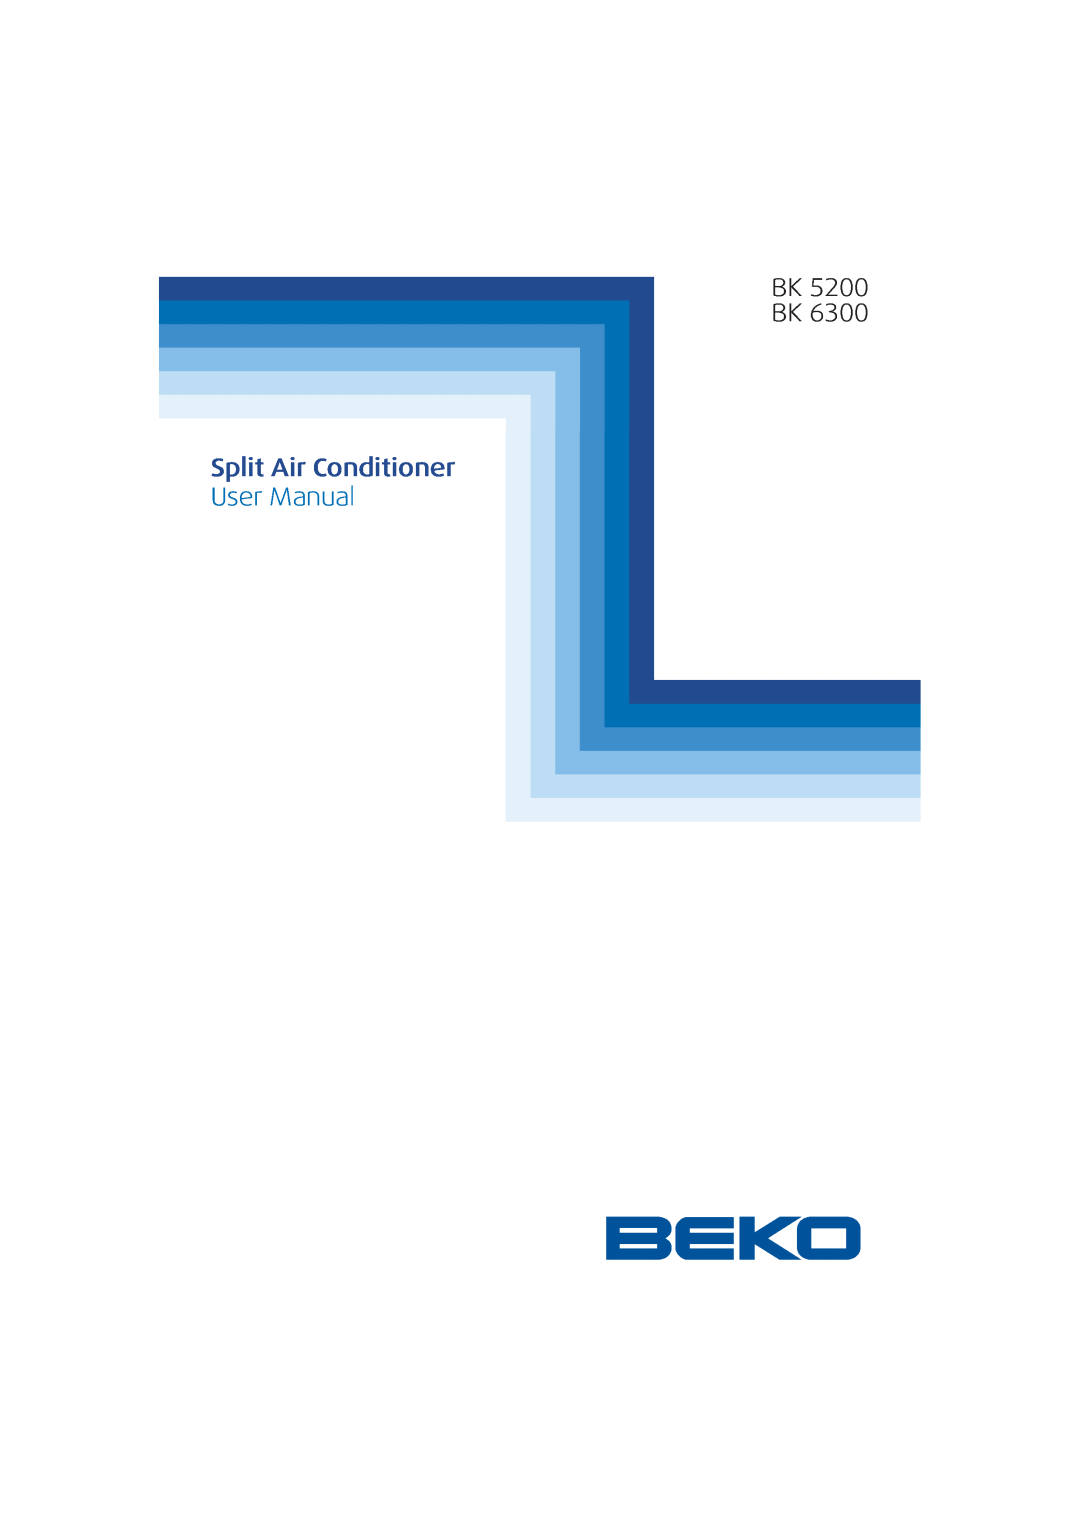 Beko BK 6300, BK 5200 user manual Bk Bk, Split Air Conditioner 